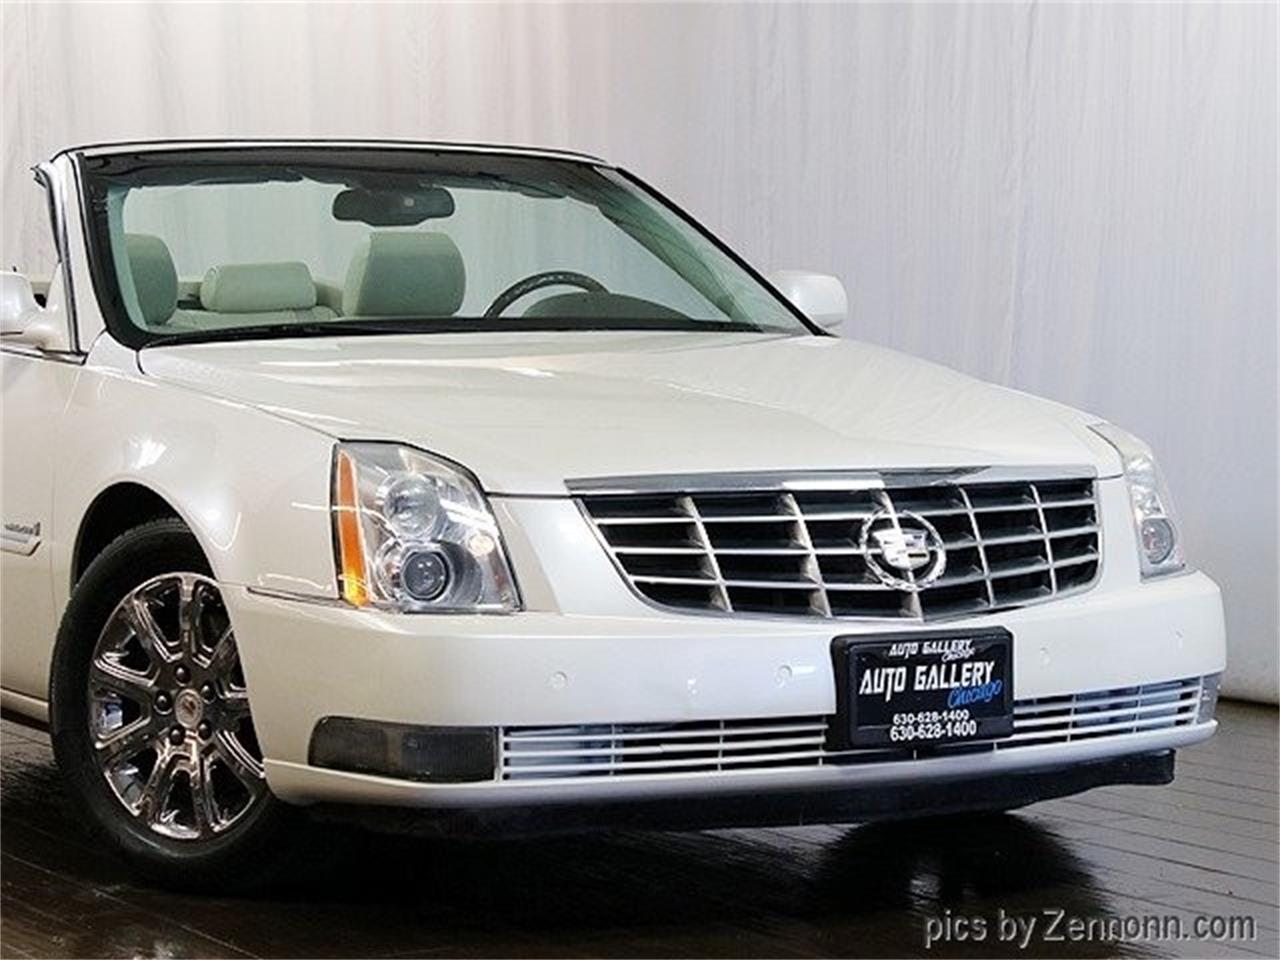 2008 Cadillac DTS for Sale | ClassicCars.com | CC-1185847